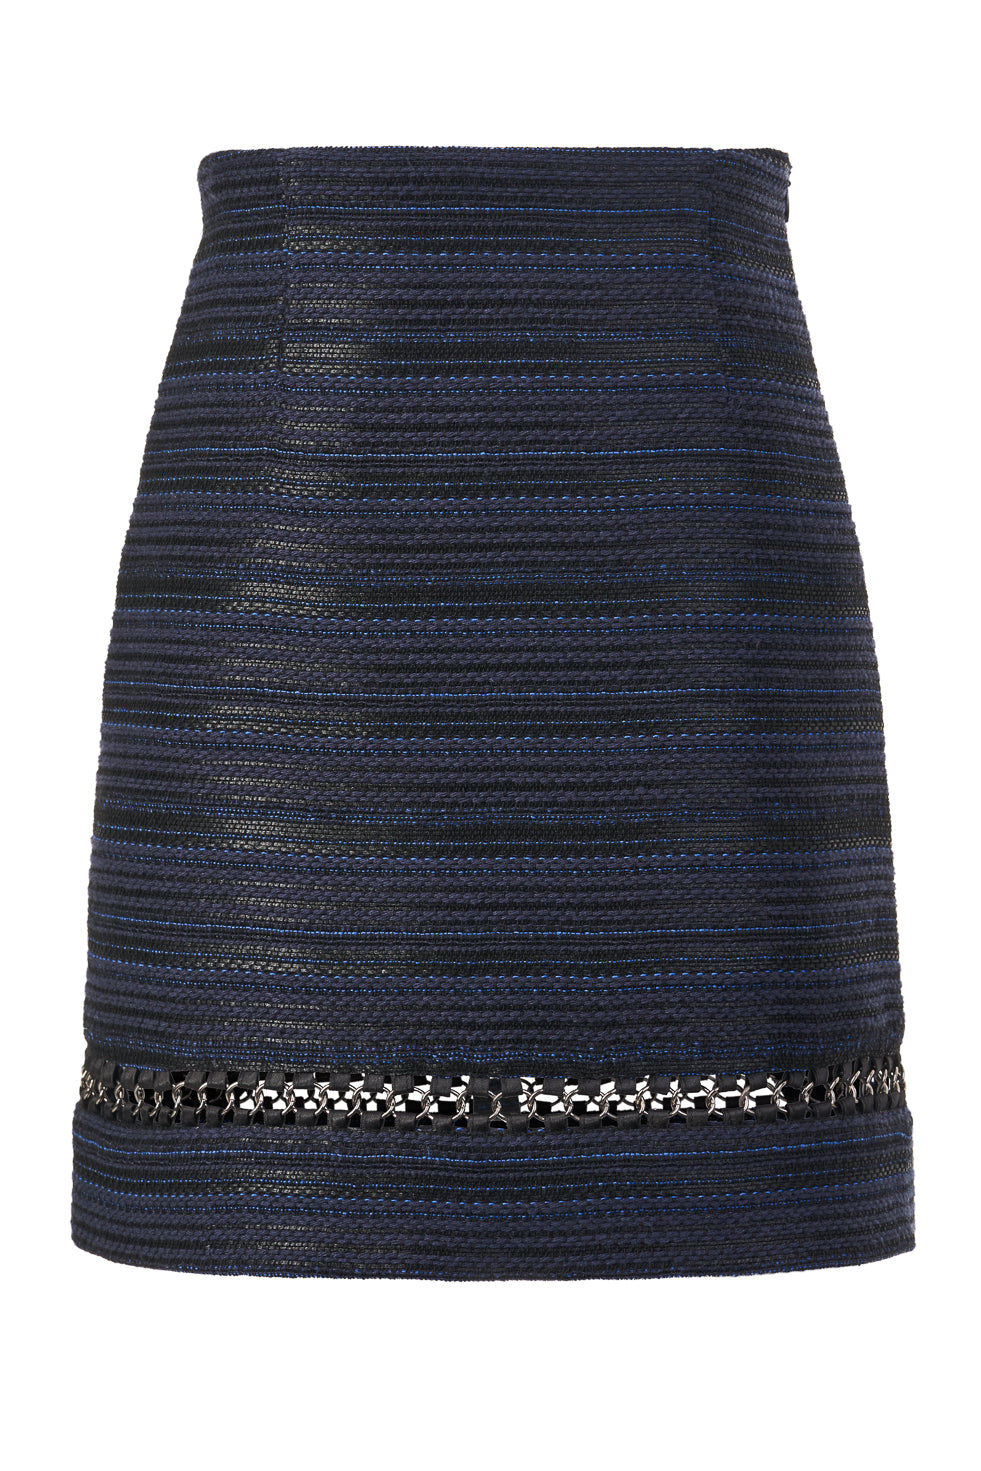 Gretta high waisted chain embroidered mini skirt